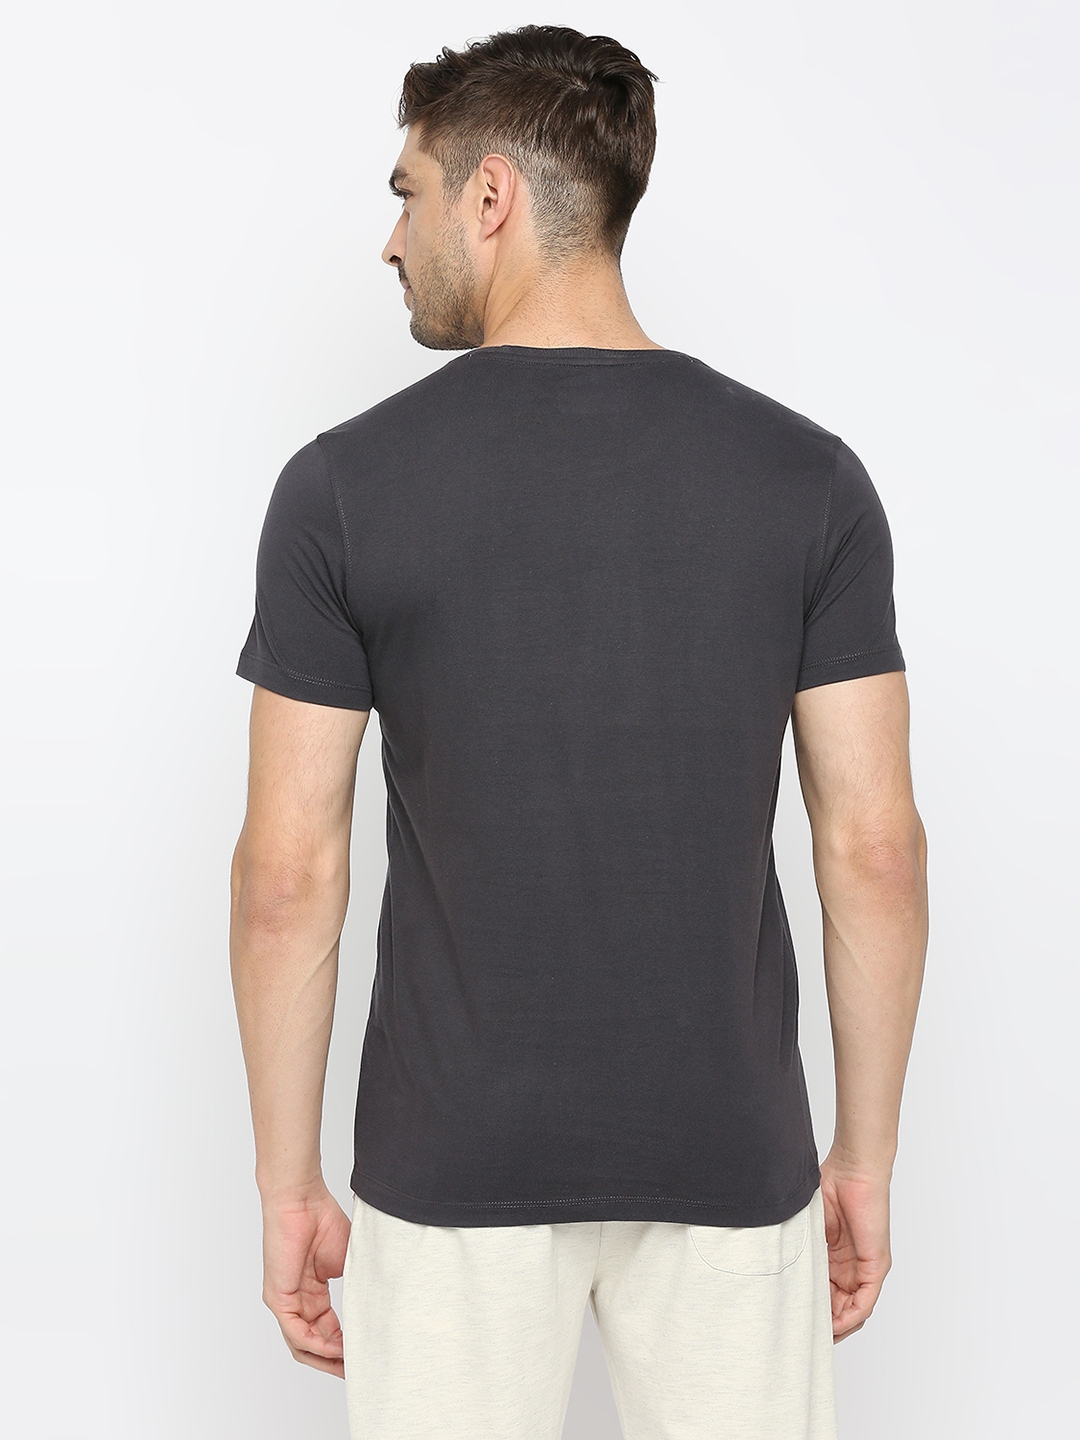 spykar | Underjeans by Spykar Men SLATE GREY Cotton Round Neck Printed Tshirt 3